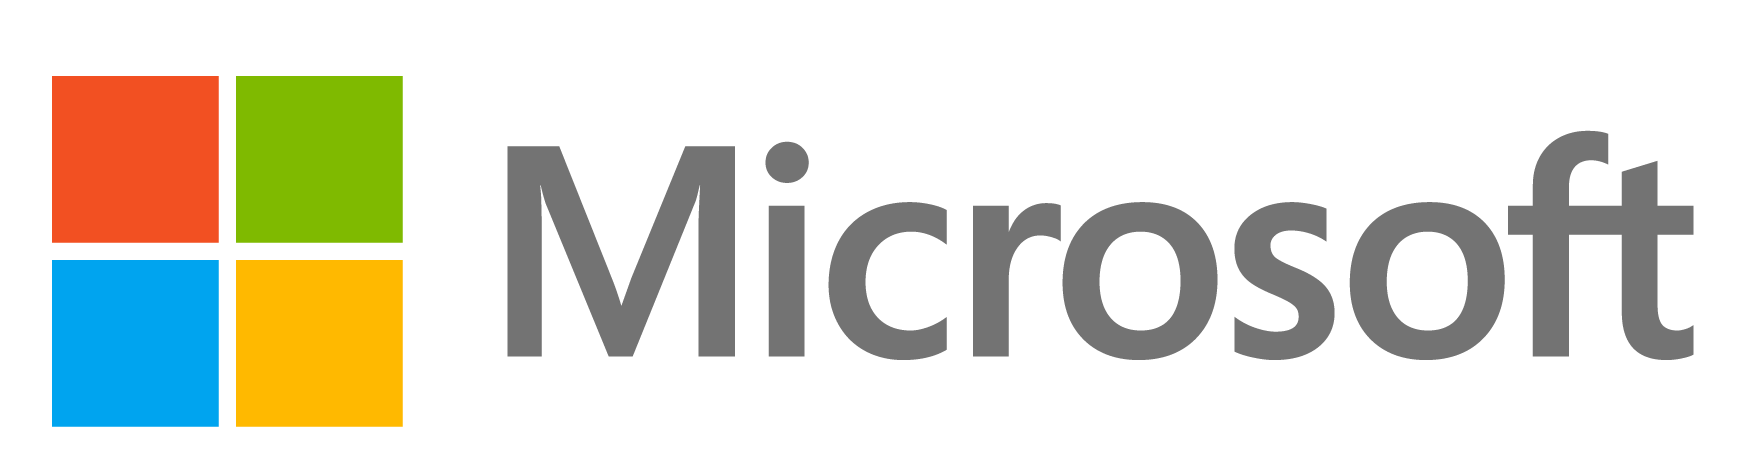 https://www.d2l.org/wp-content/uploads/2018/06/Microsoft-Logo-Transparent-Background1.png